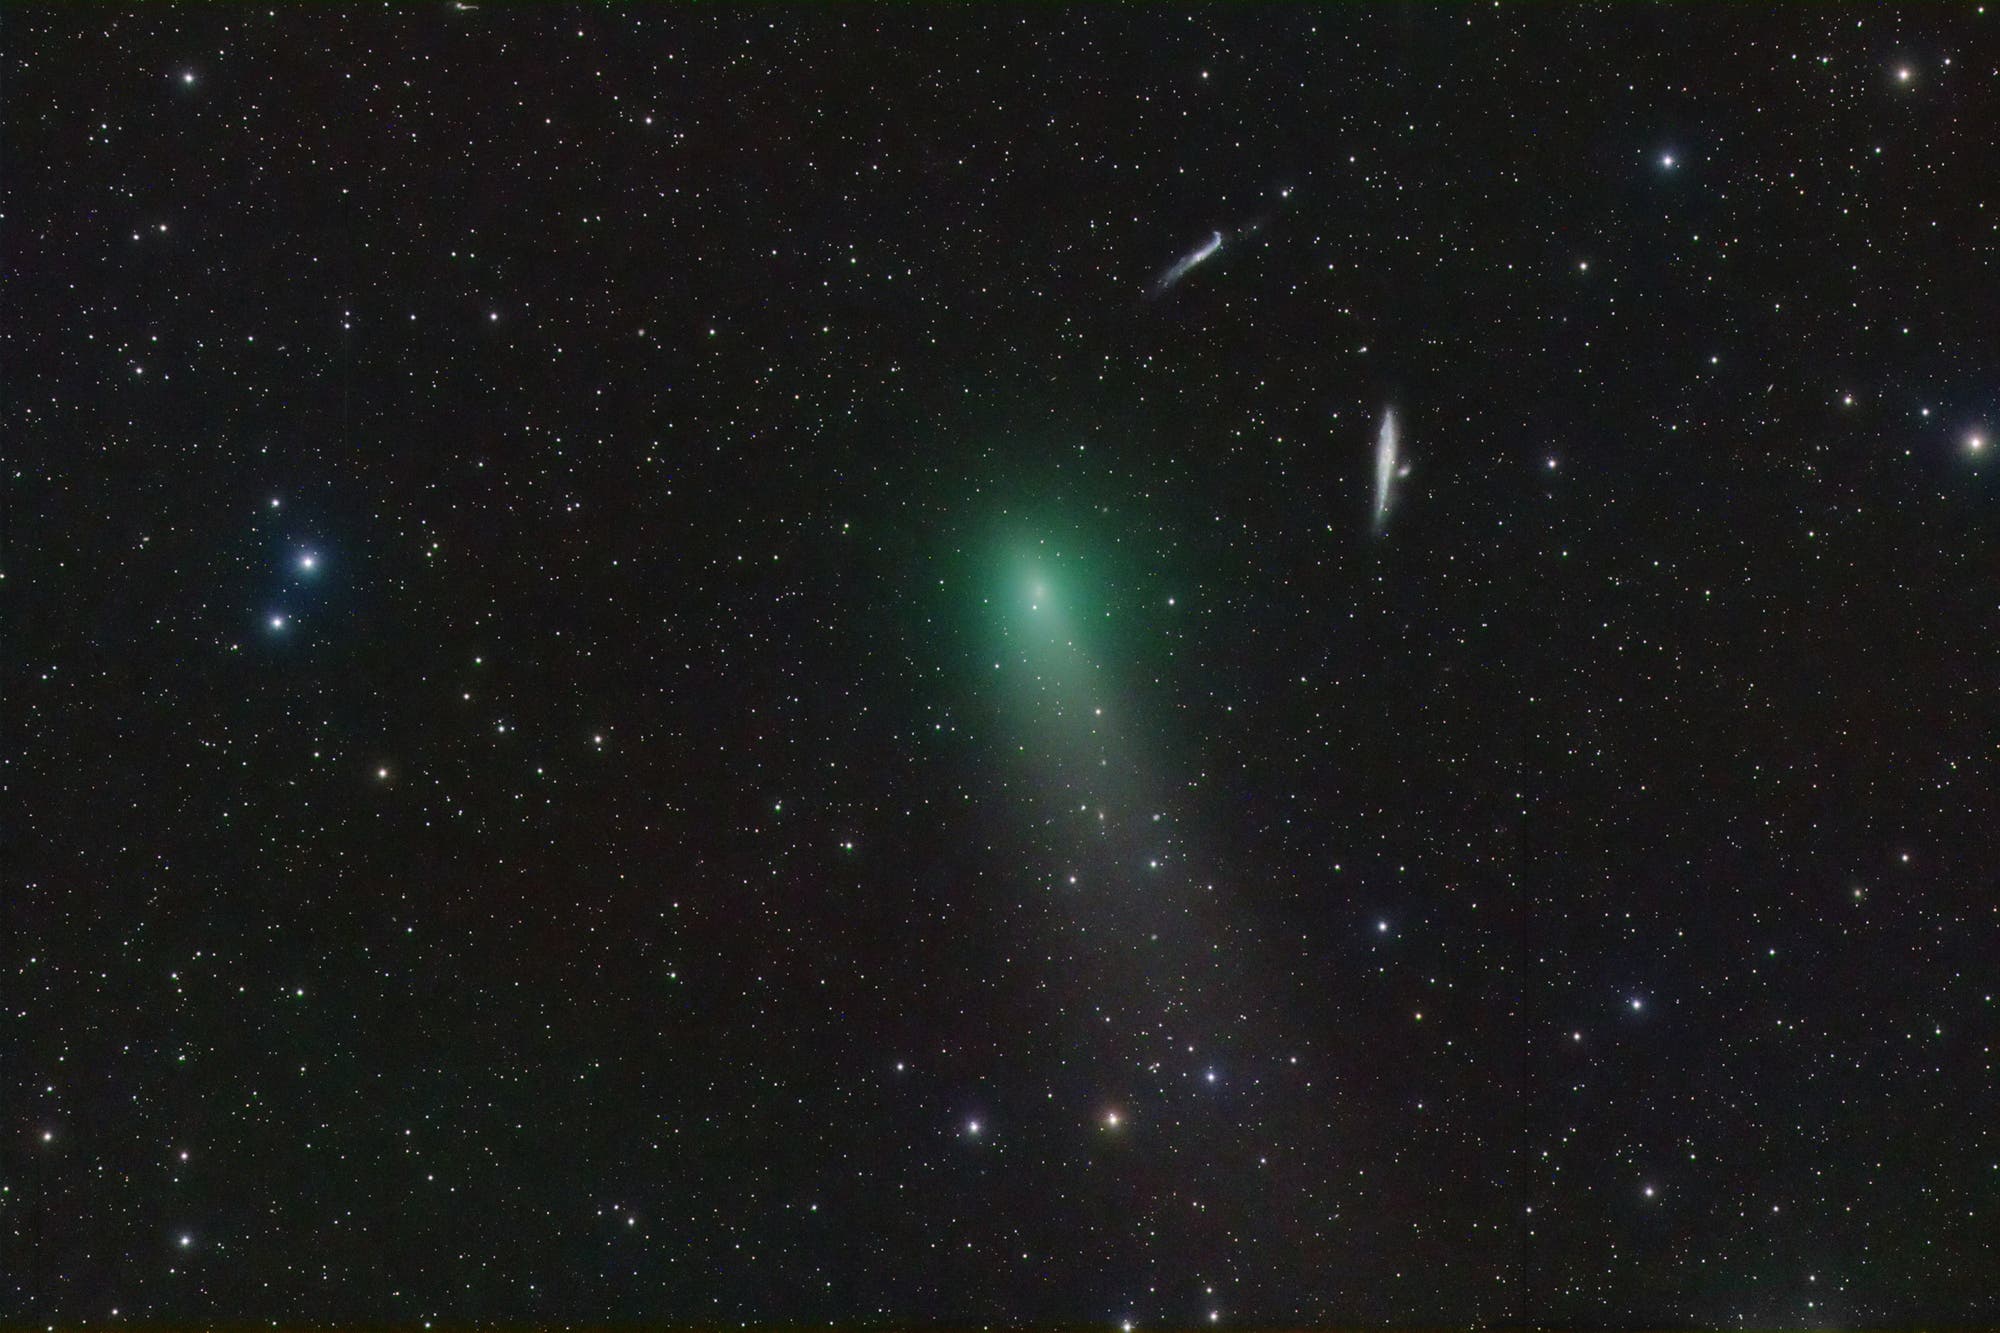 Comet 45P sails in the dark